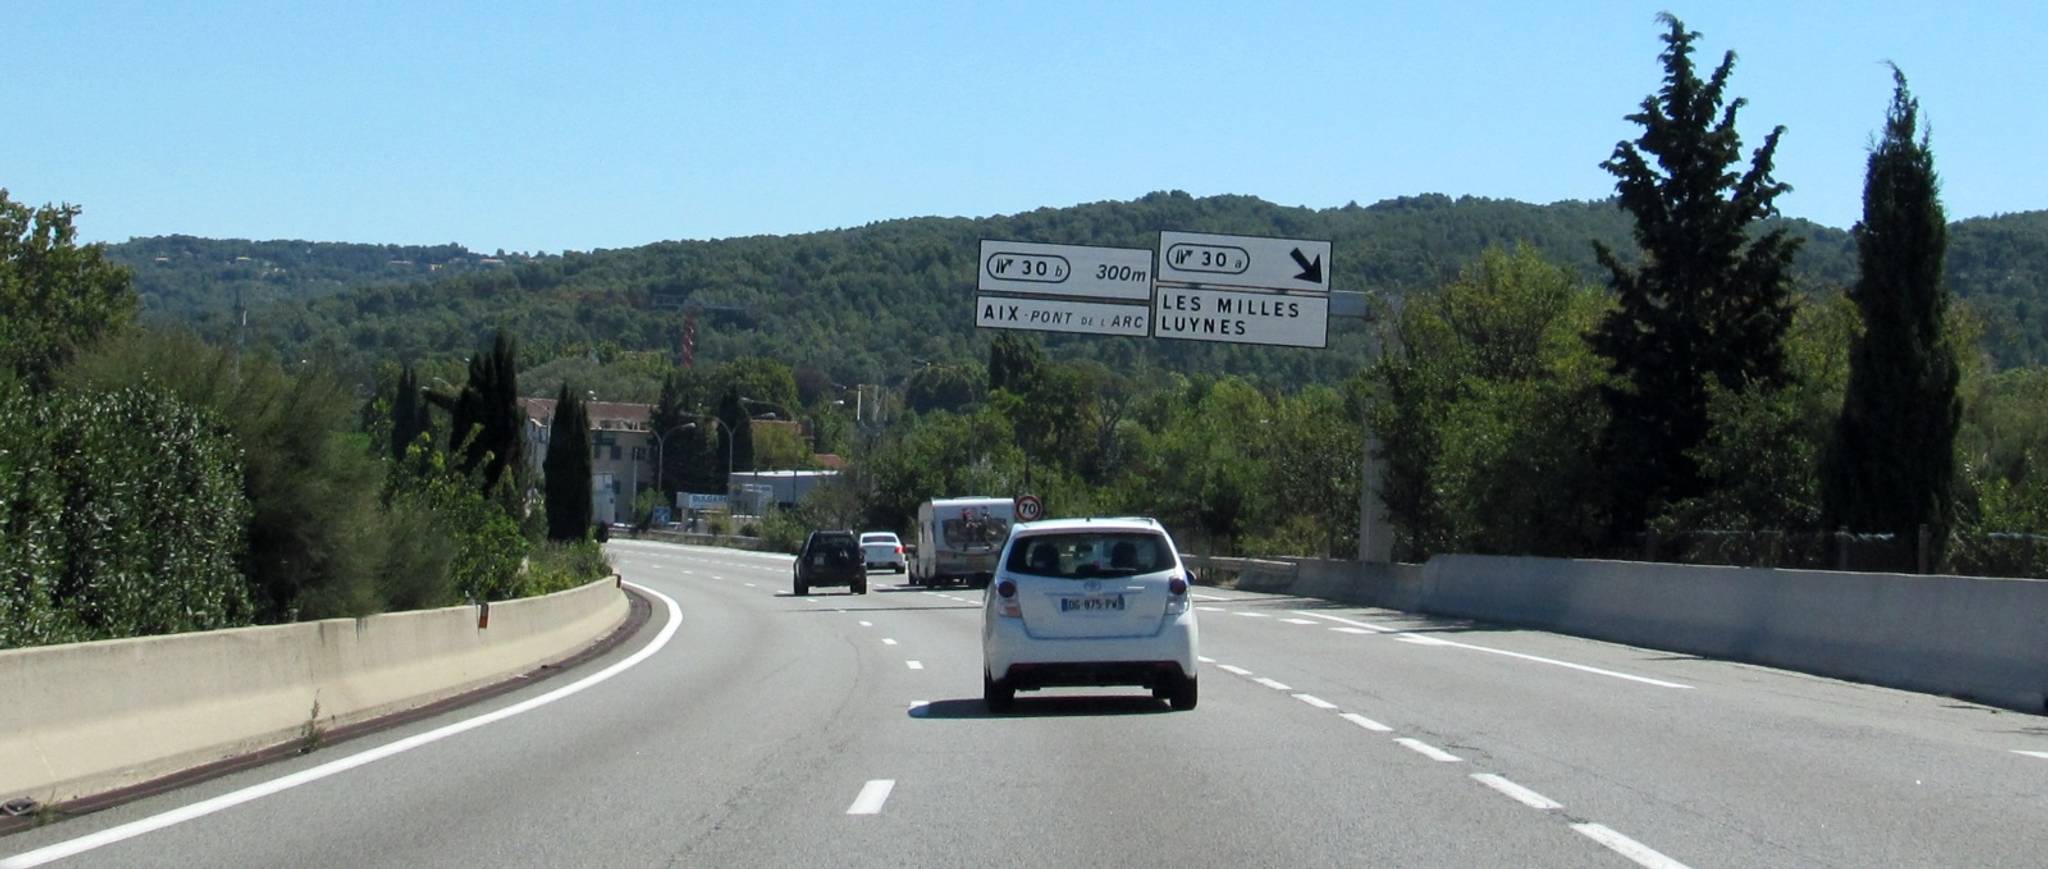 Dangerous drivers rule the roads in rural France